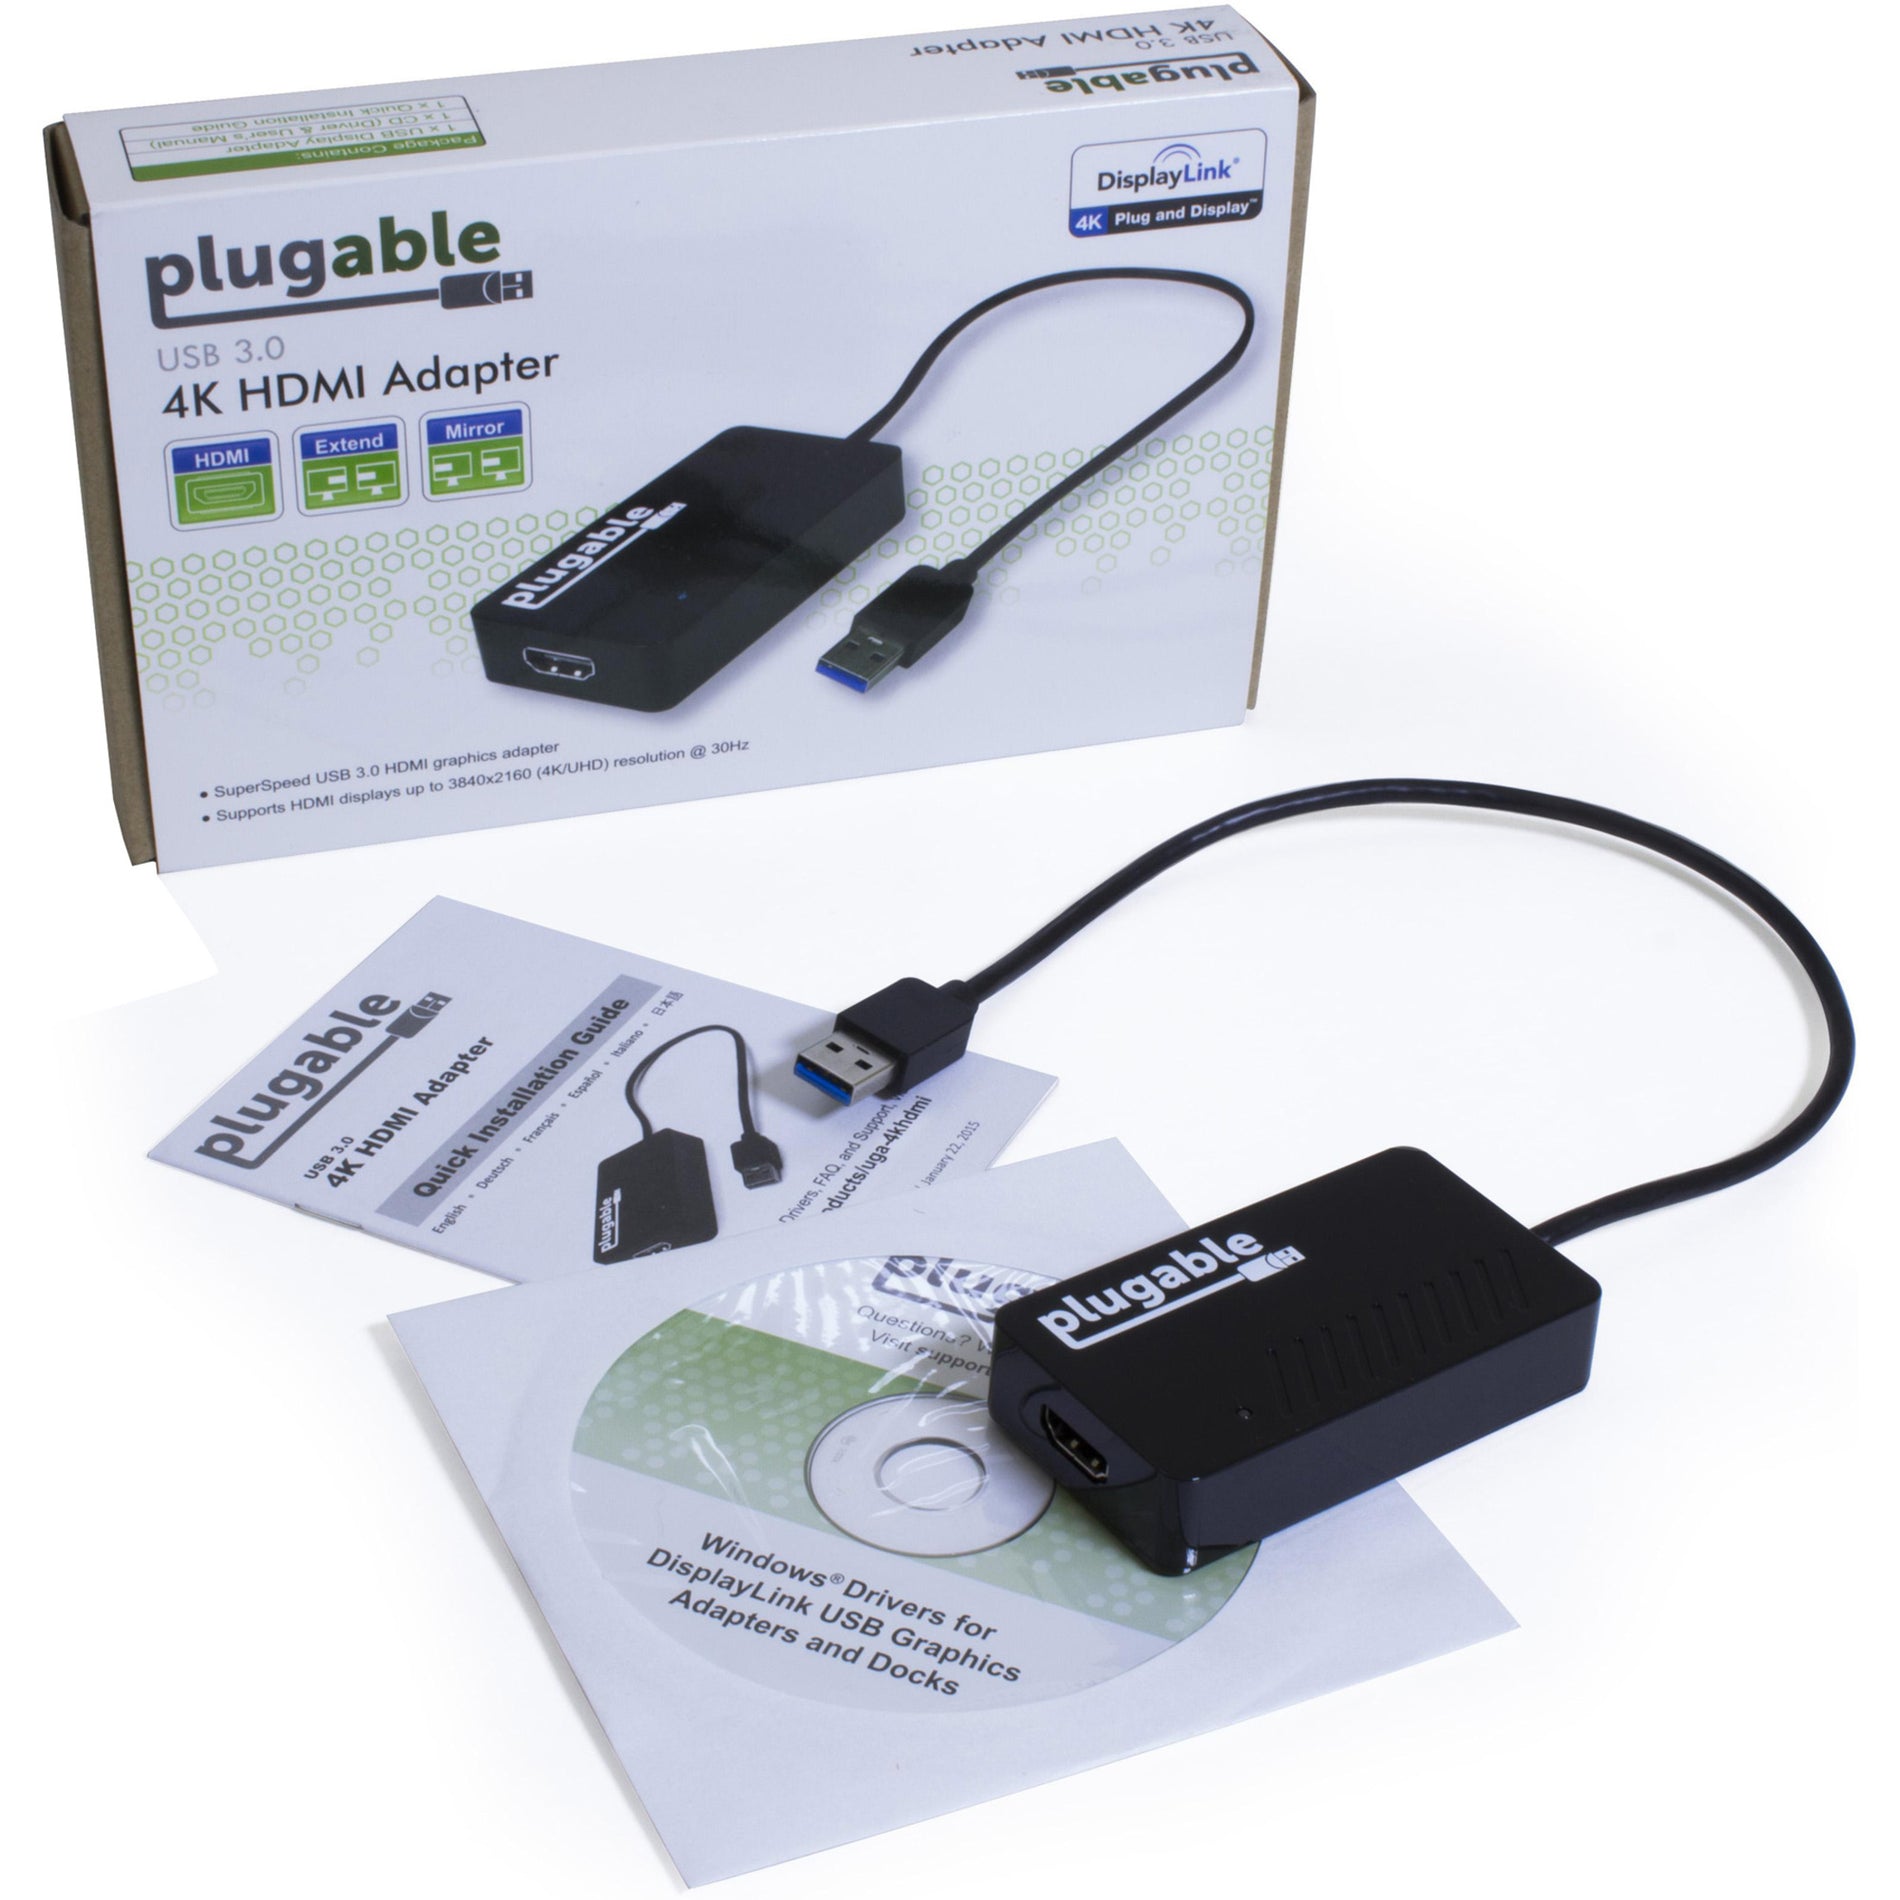 Plugable UGA-4KHDMI USB 3.0 4K HDMI Adapter for Multiple Monitors, Easy Display Expansion